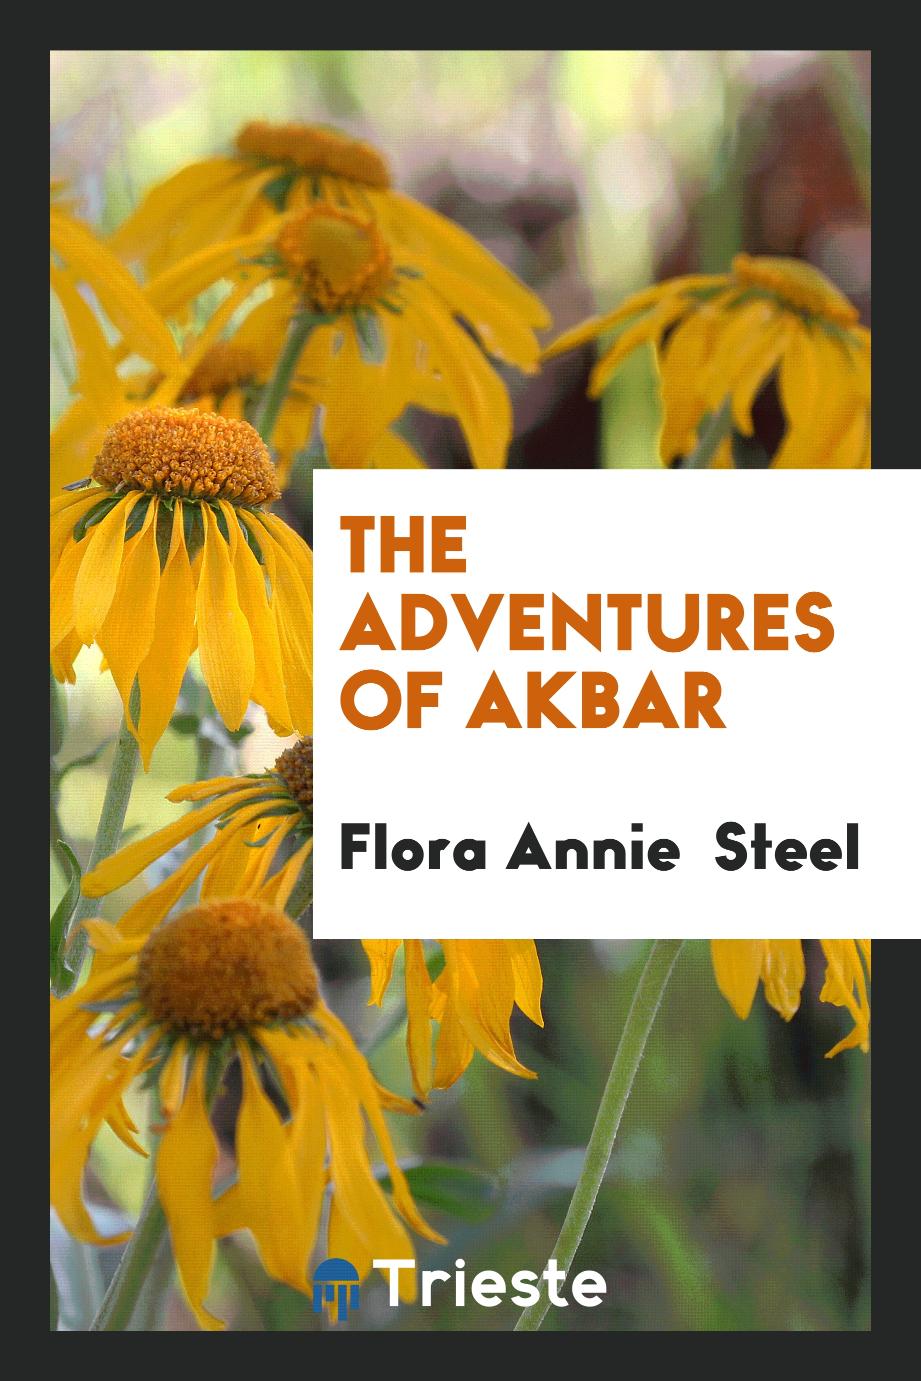 The adventures of Akbar